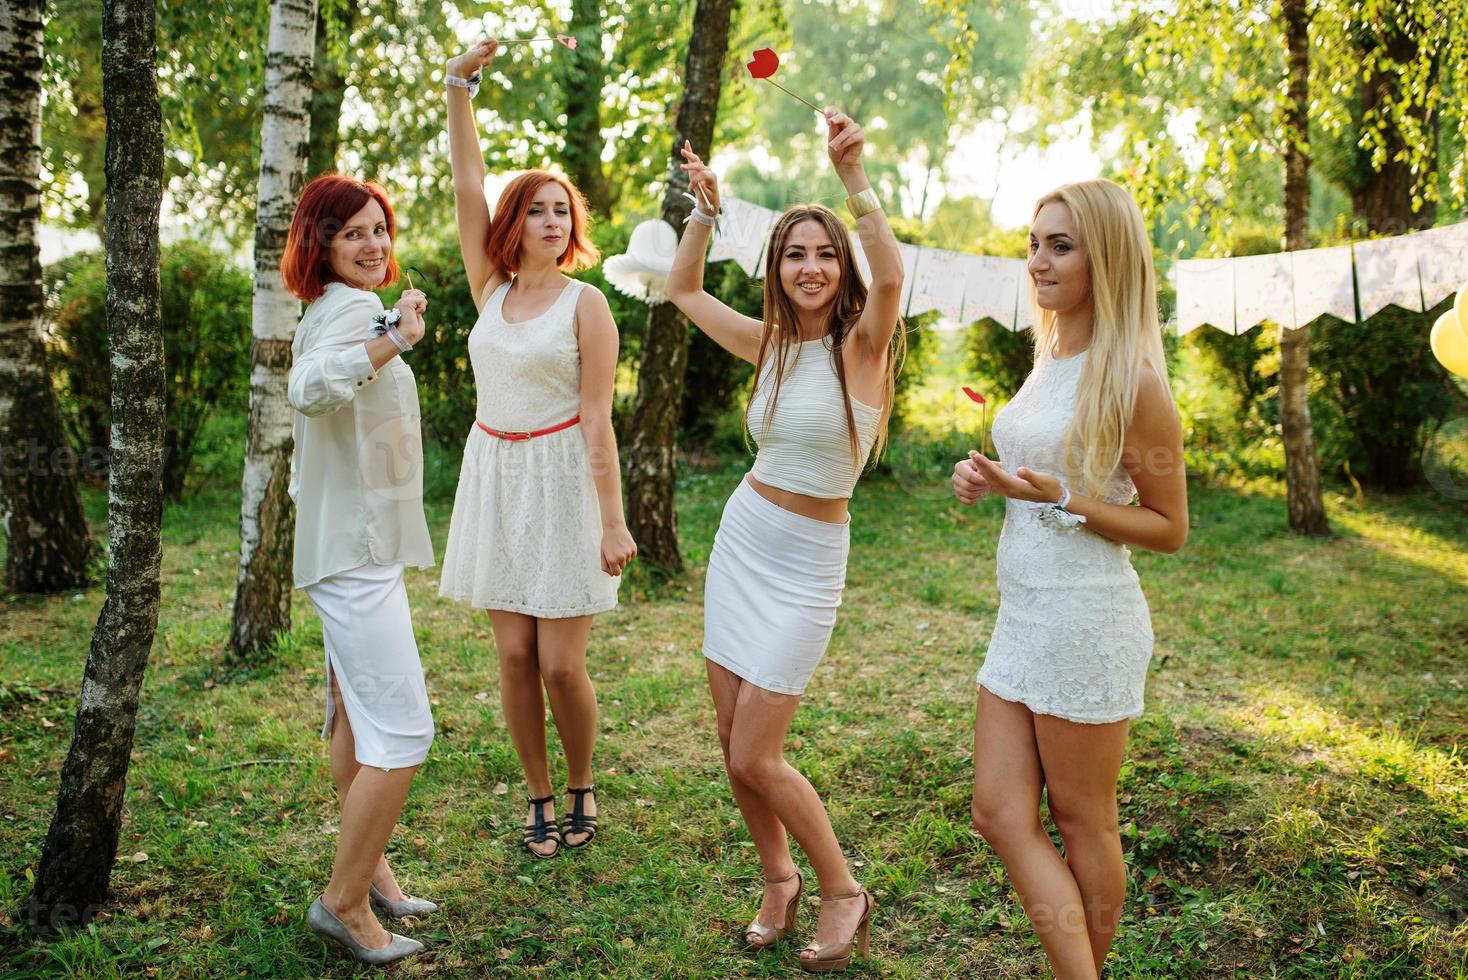 Girls wearing on white dresses having fun on hen party. photo